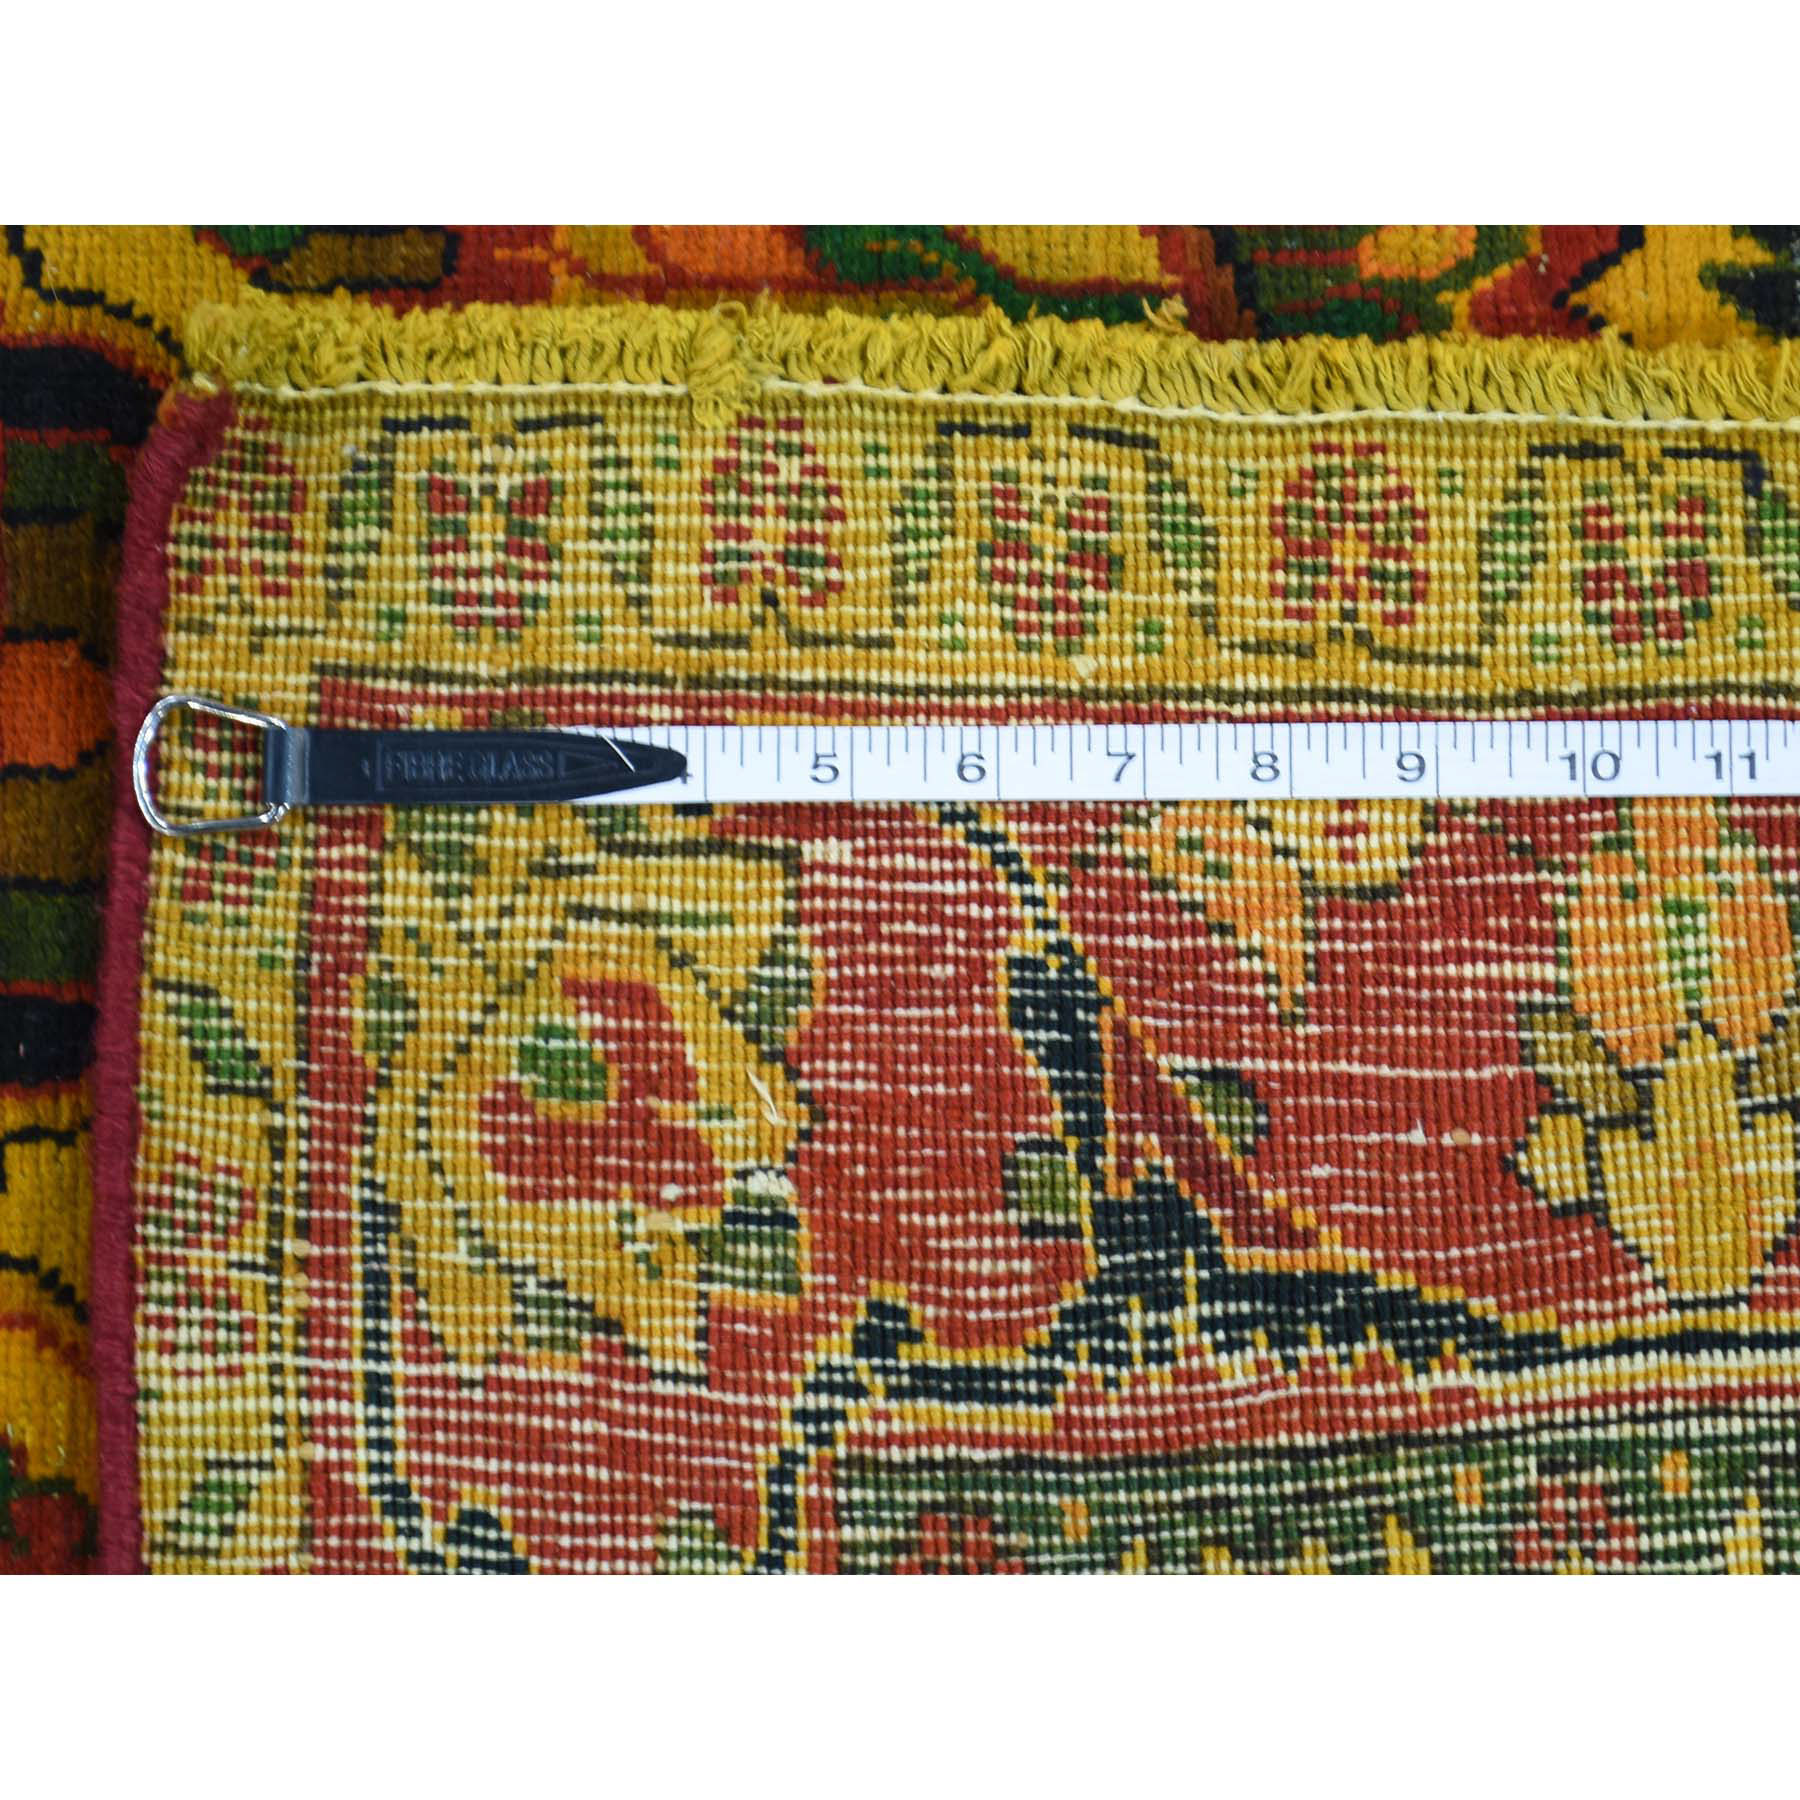 4-6 x10-3  Handmade Overdyed Persian Bakhtiari Vintage Wide Runner Rug 